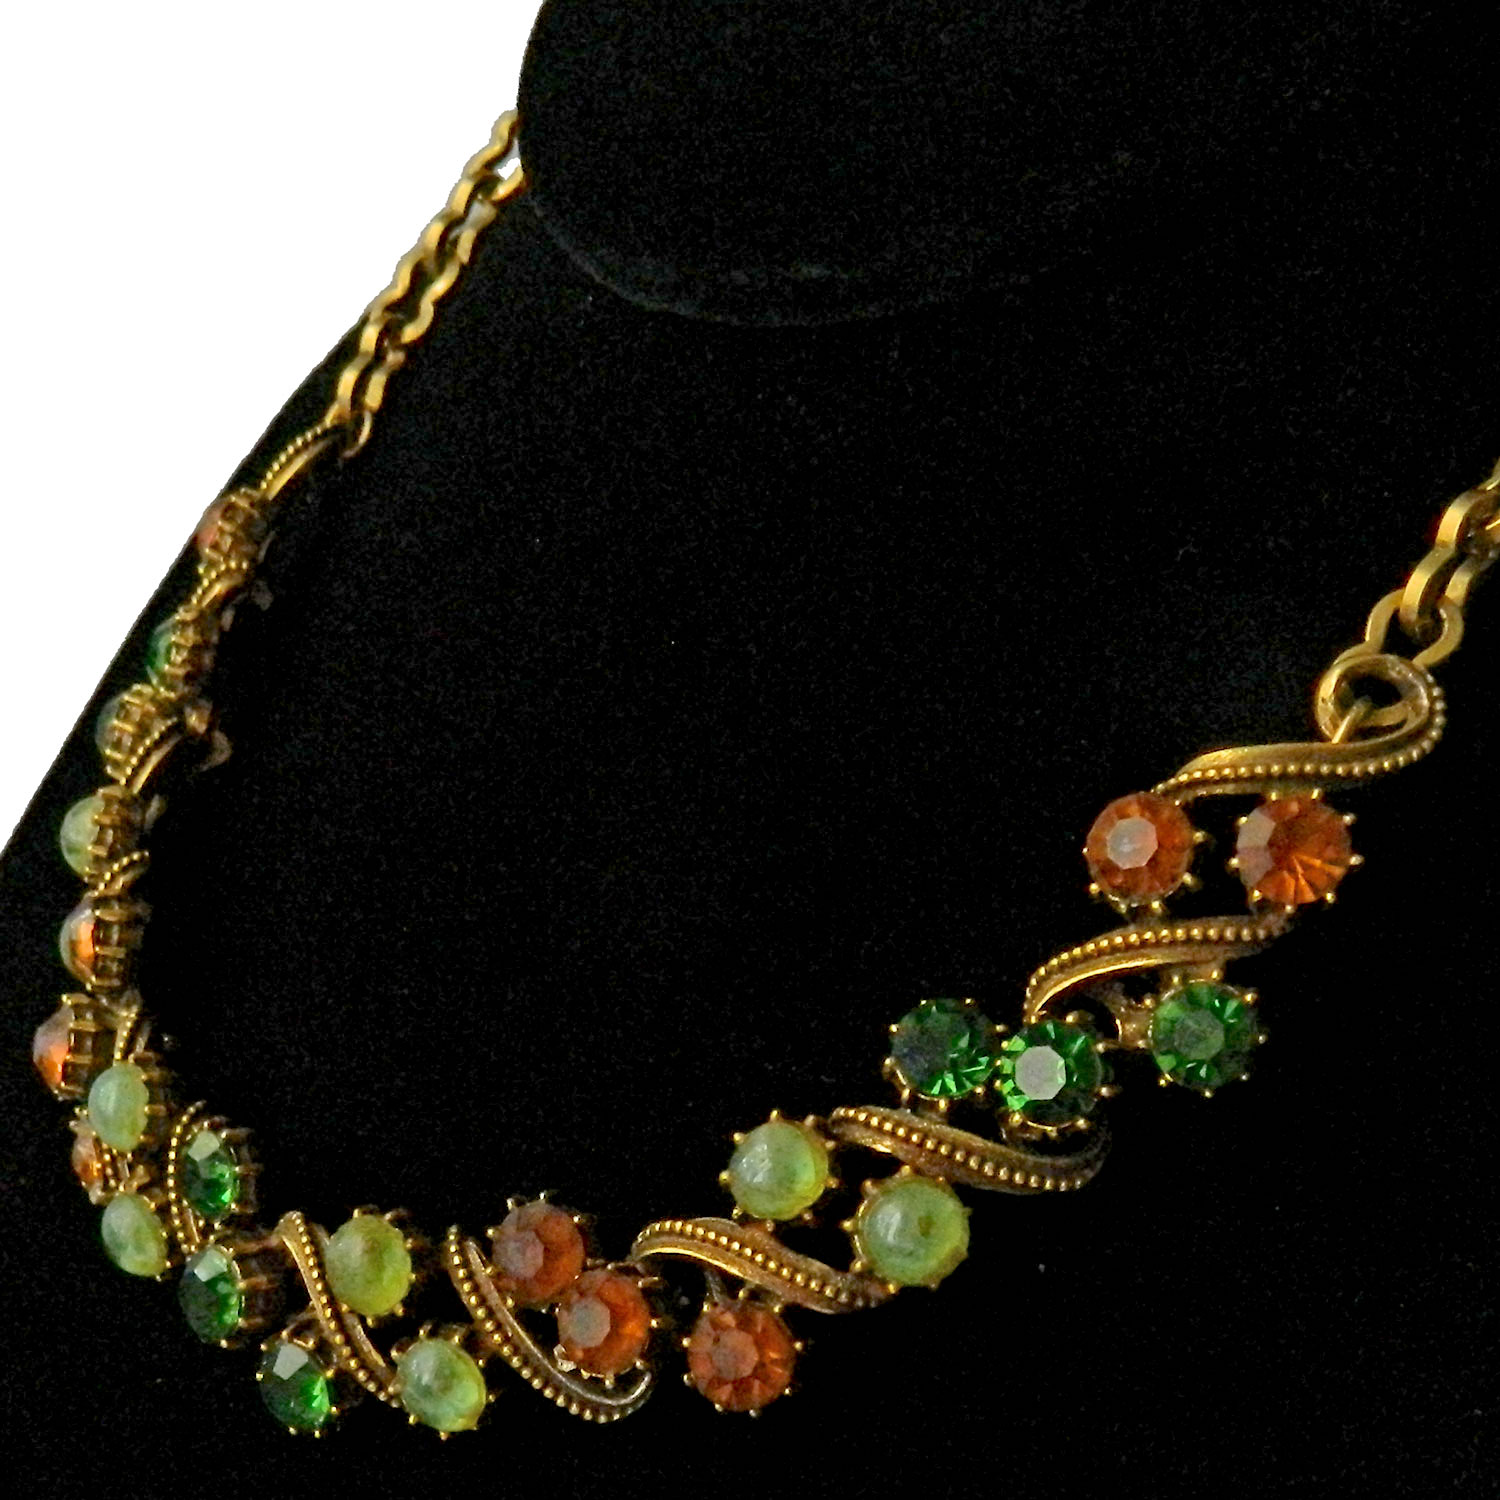 Florenza necklace